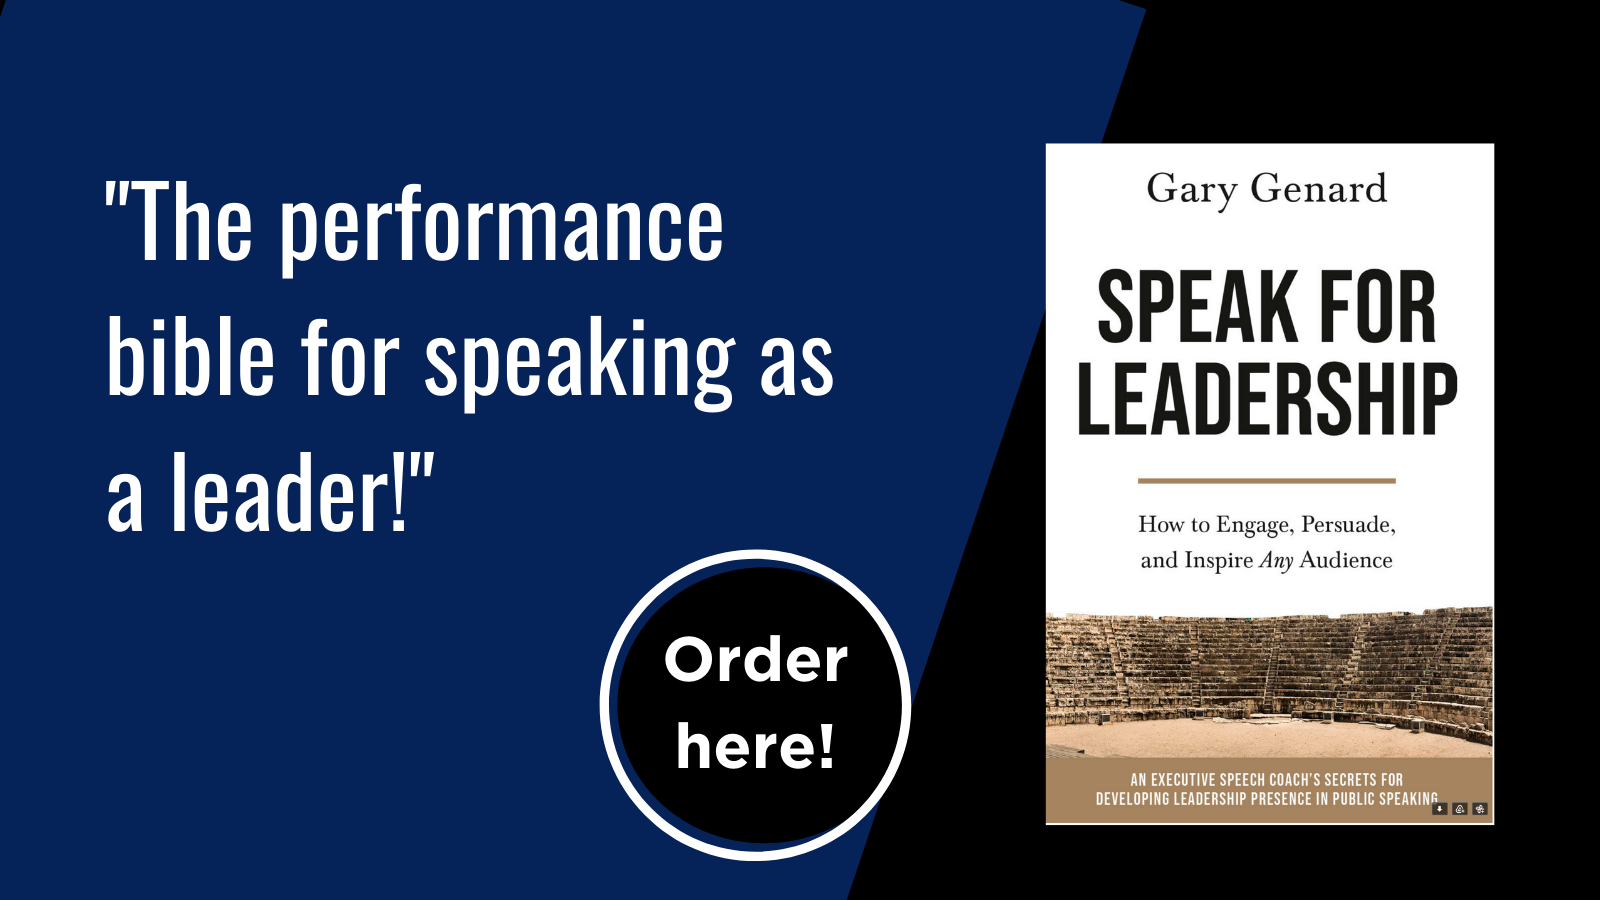 Dr. Gary Genard's handbook on leadership, Speak for Leadership.